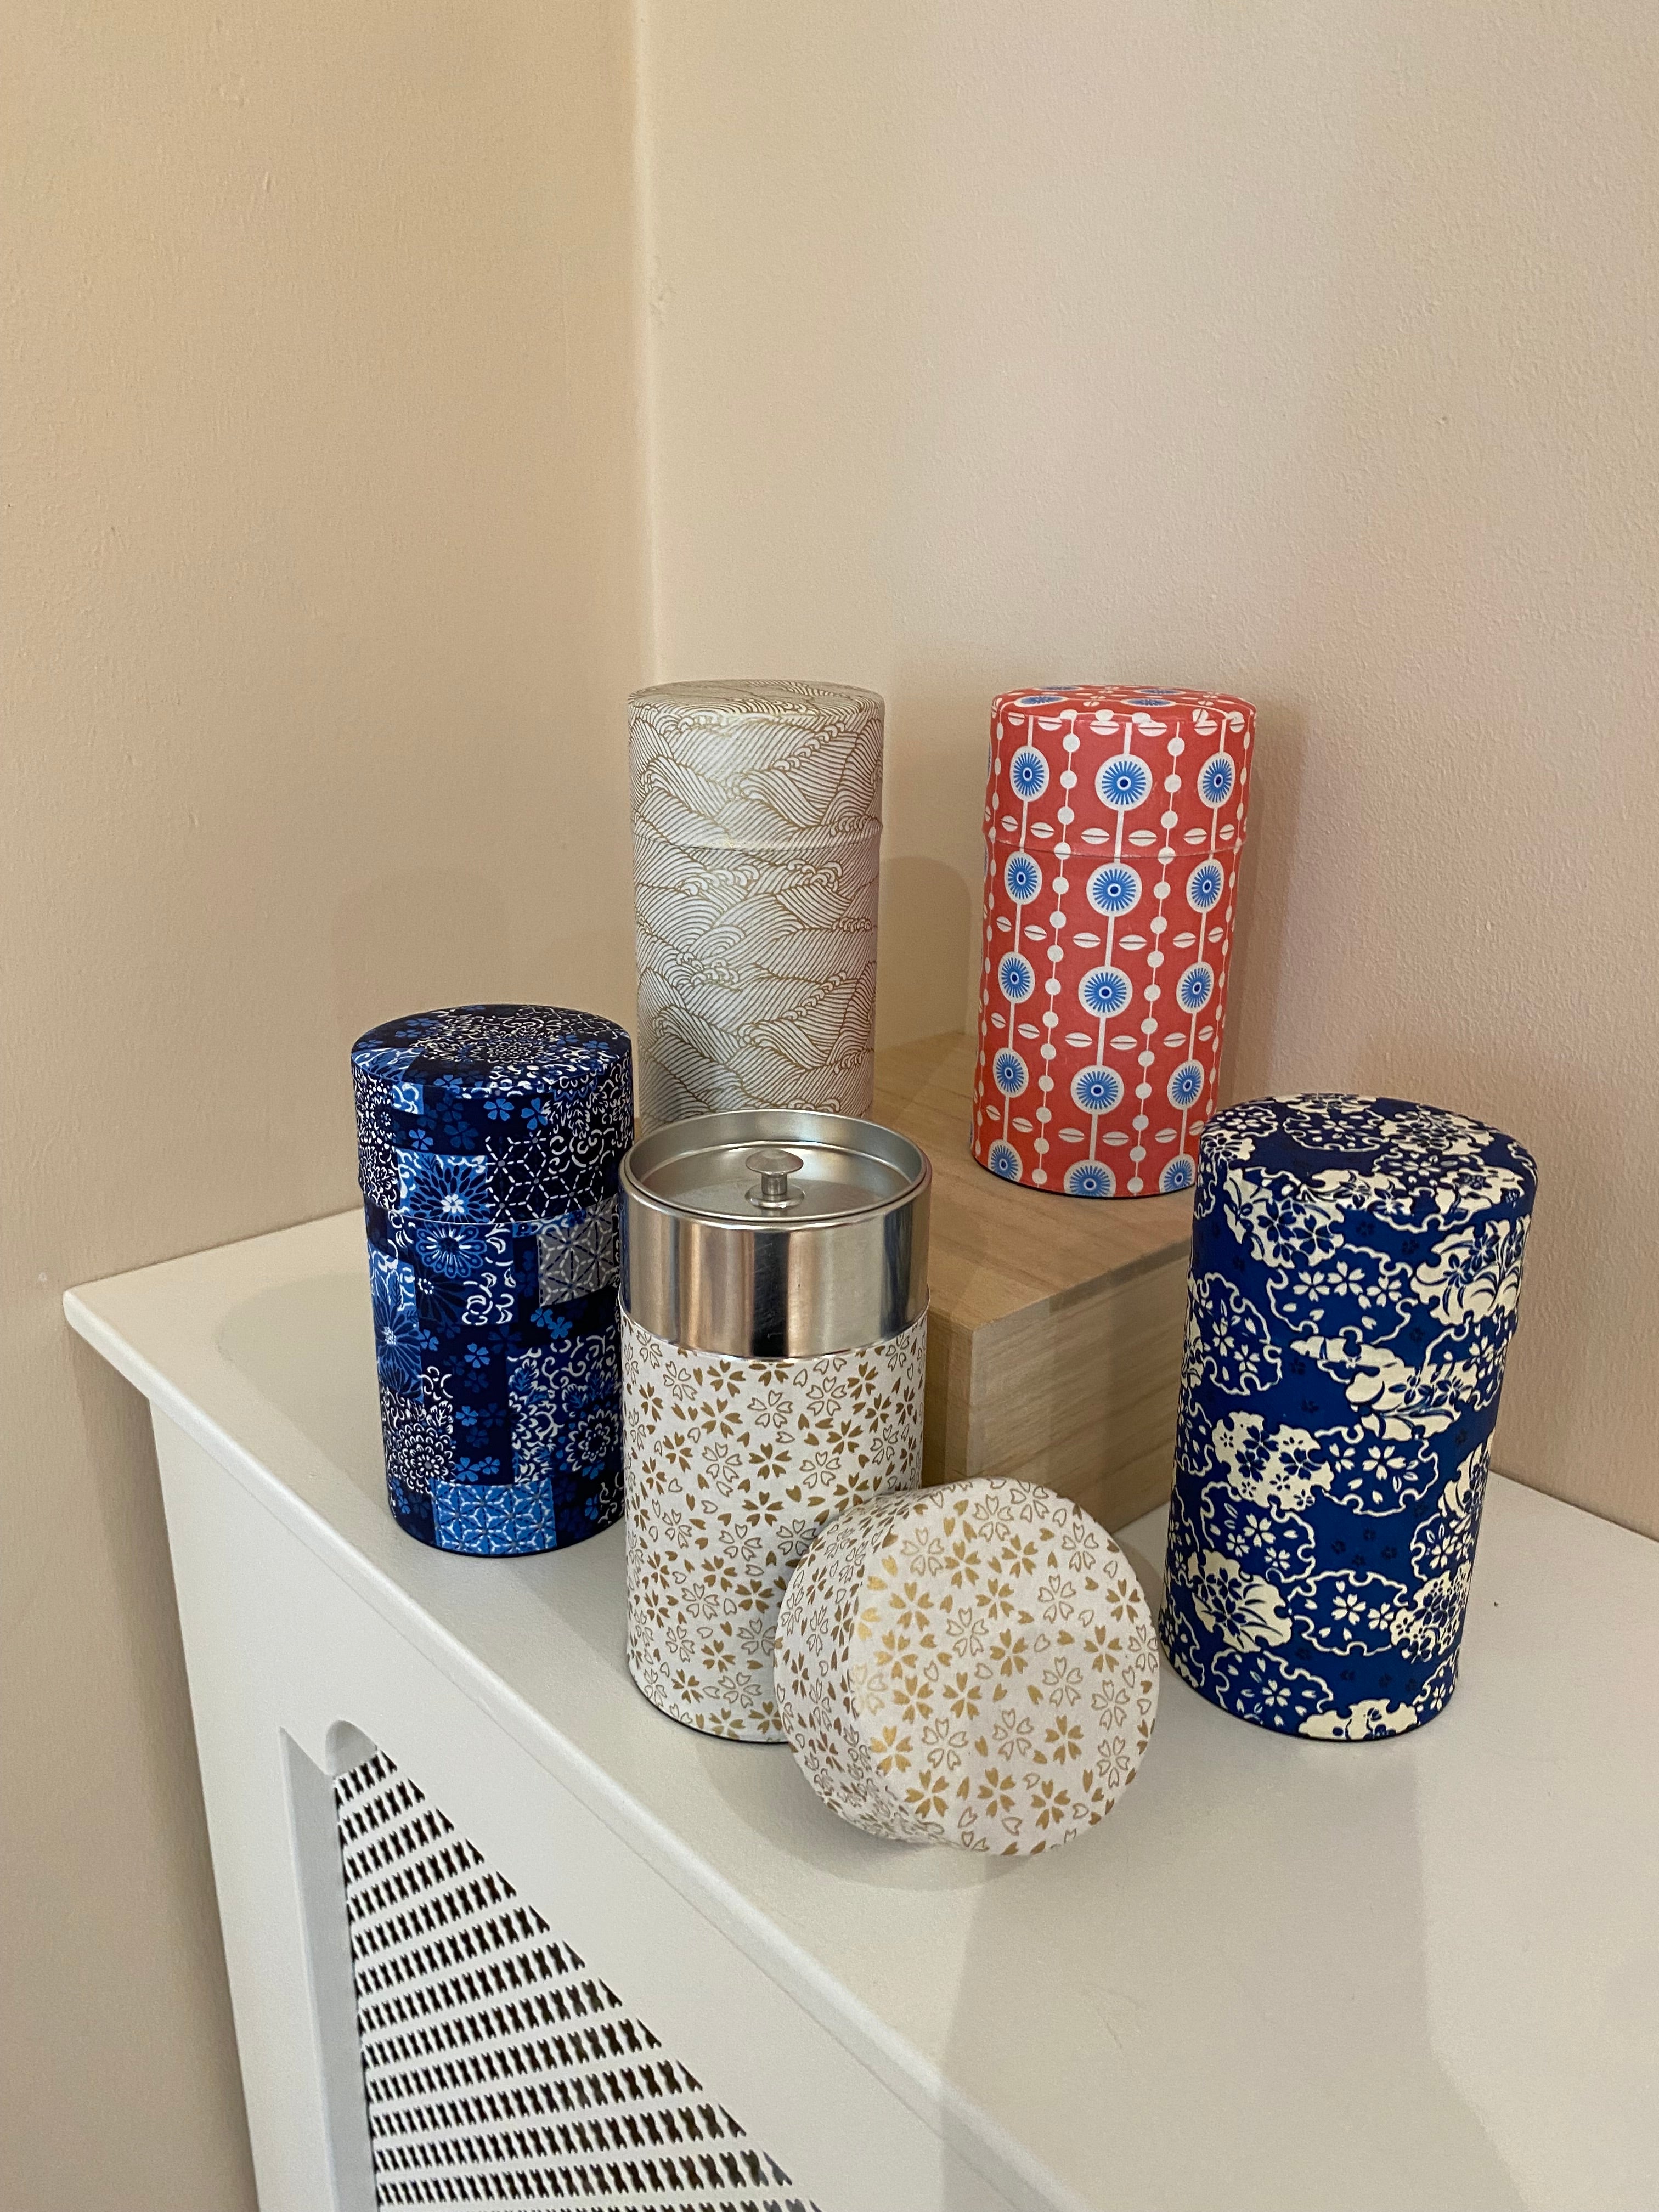 Tea tins in different patterns - tall